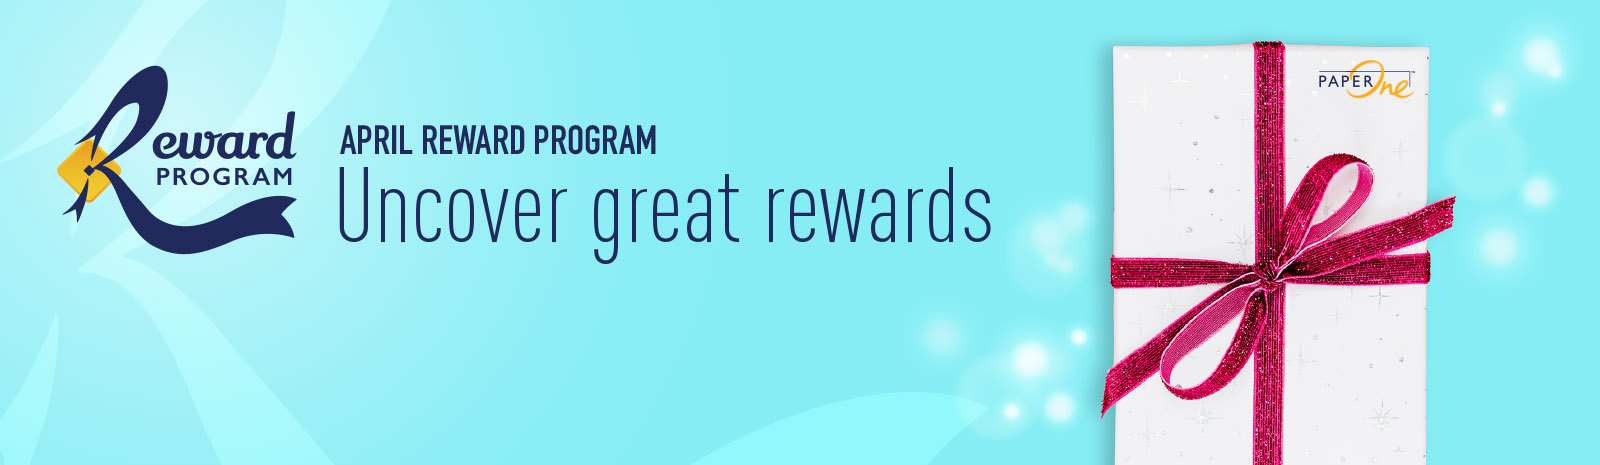 Welcome to April Reward Program